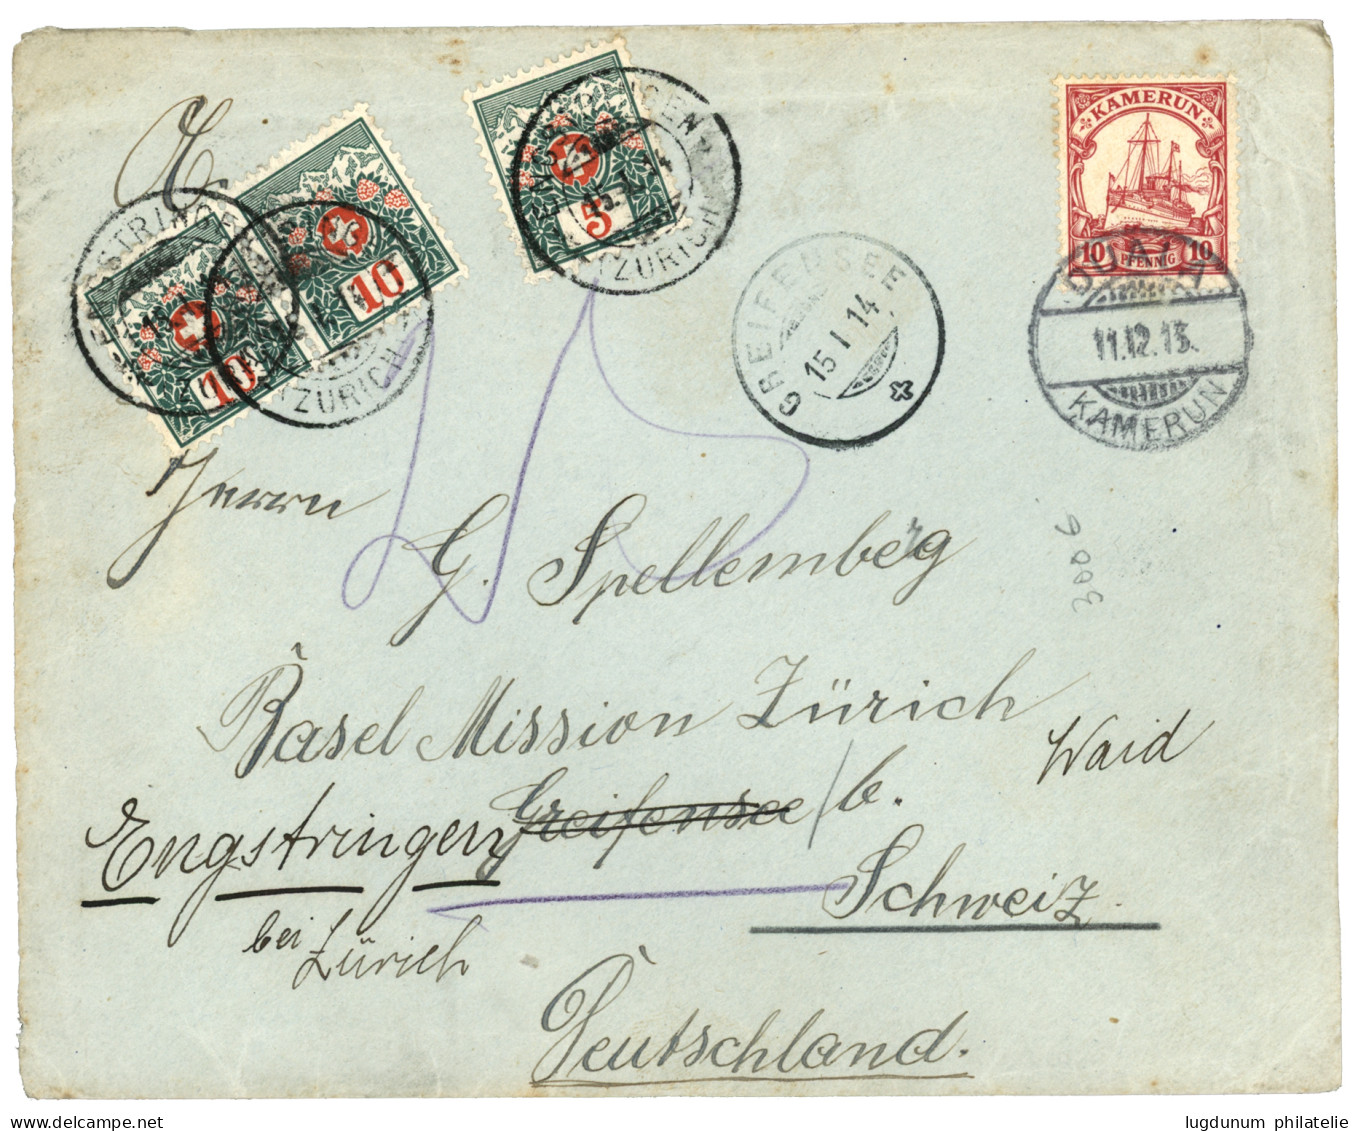 DUALA : 1913 KAMERUN 10pf Canc. DUALA + SWITZERLAND POSTAGE DUES 5c + 10c (x2) On Envelope To GERMANY Redirected To BASE - Cameroun